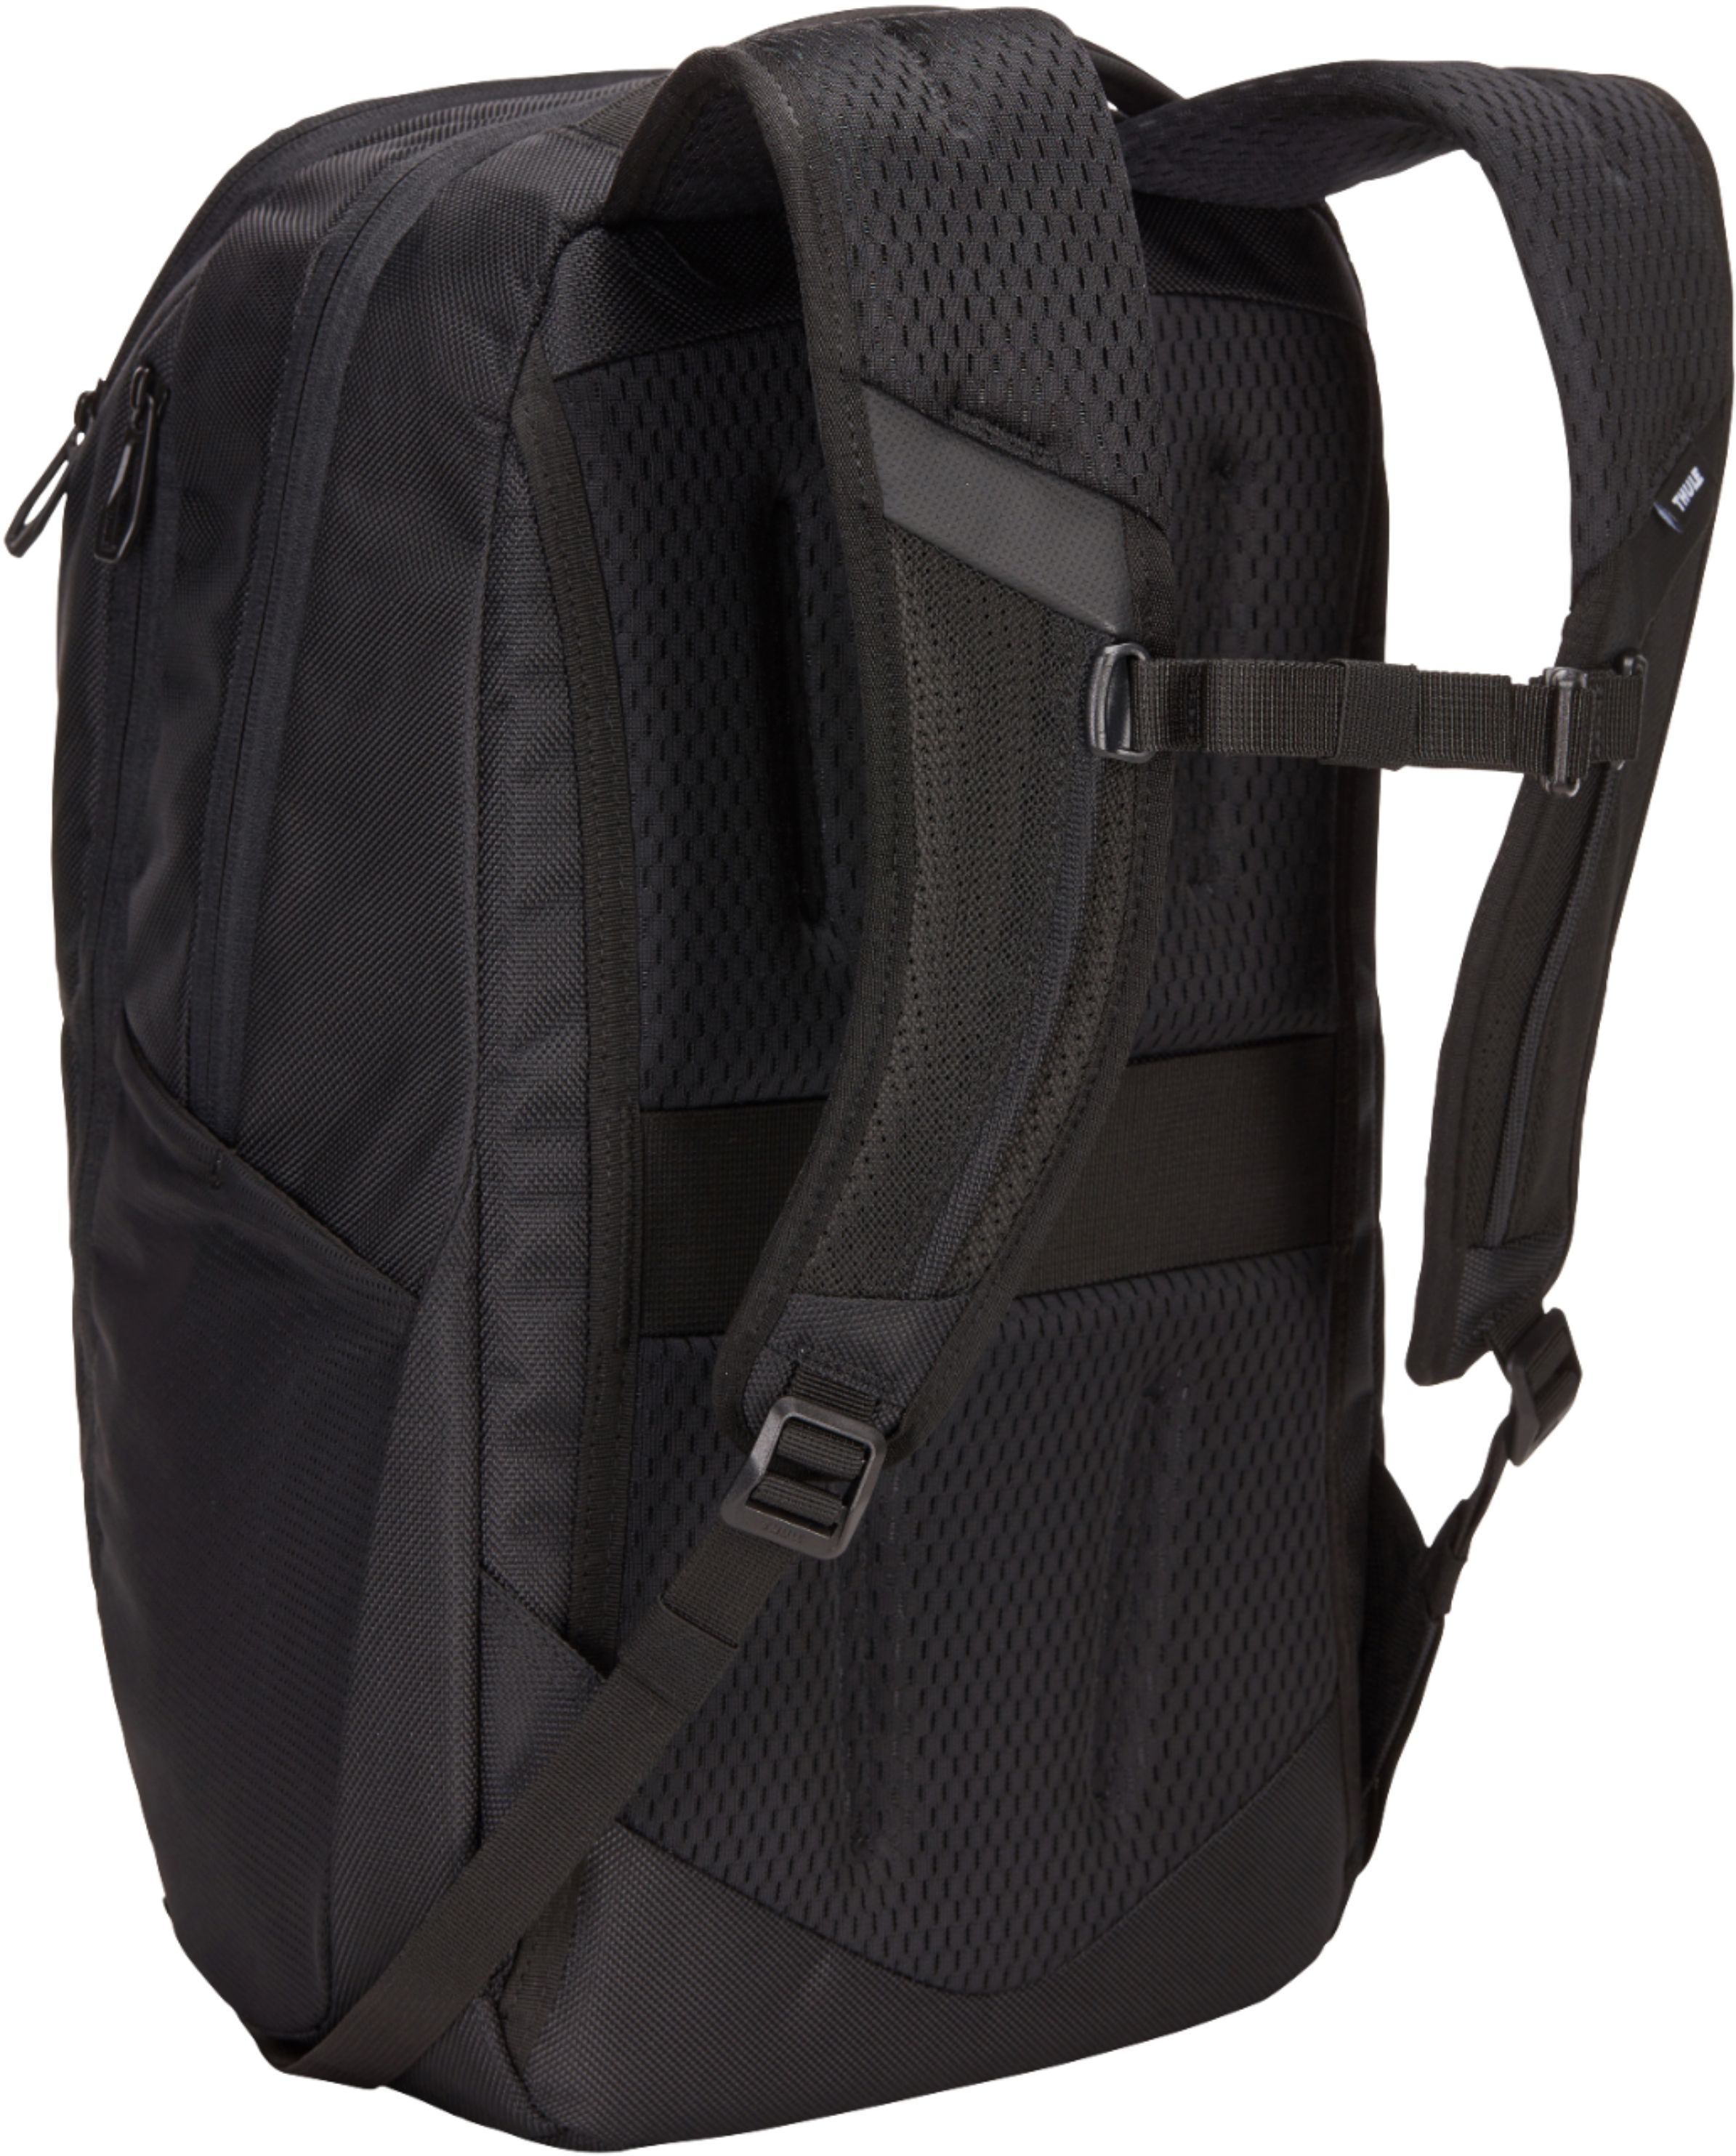 Back View: Thule - Accent Backpack 23L Bundle for 15.6" Laptop w/ Subterra PowerShuttle, 10" Tablet Sleeve, SafeZone, & Water Bottle Holder - Black